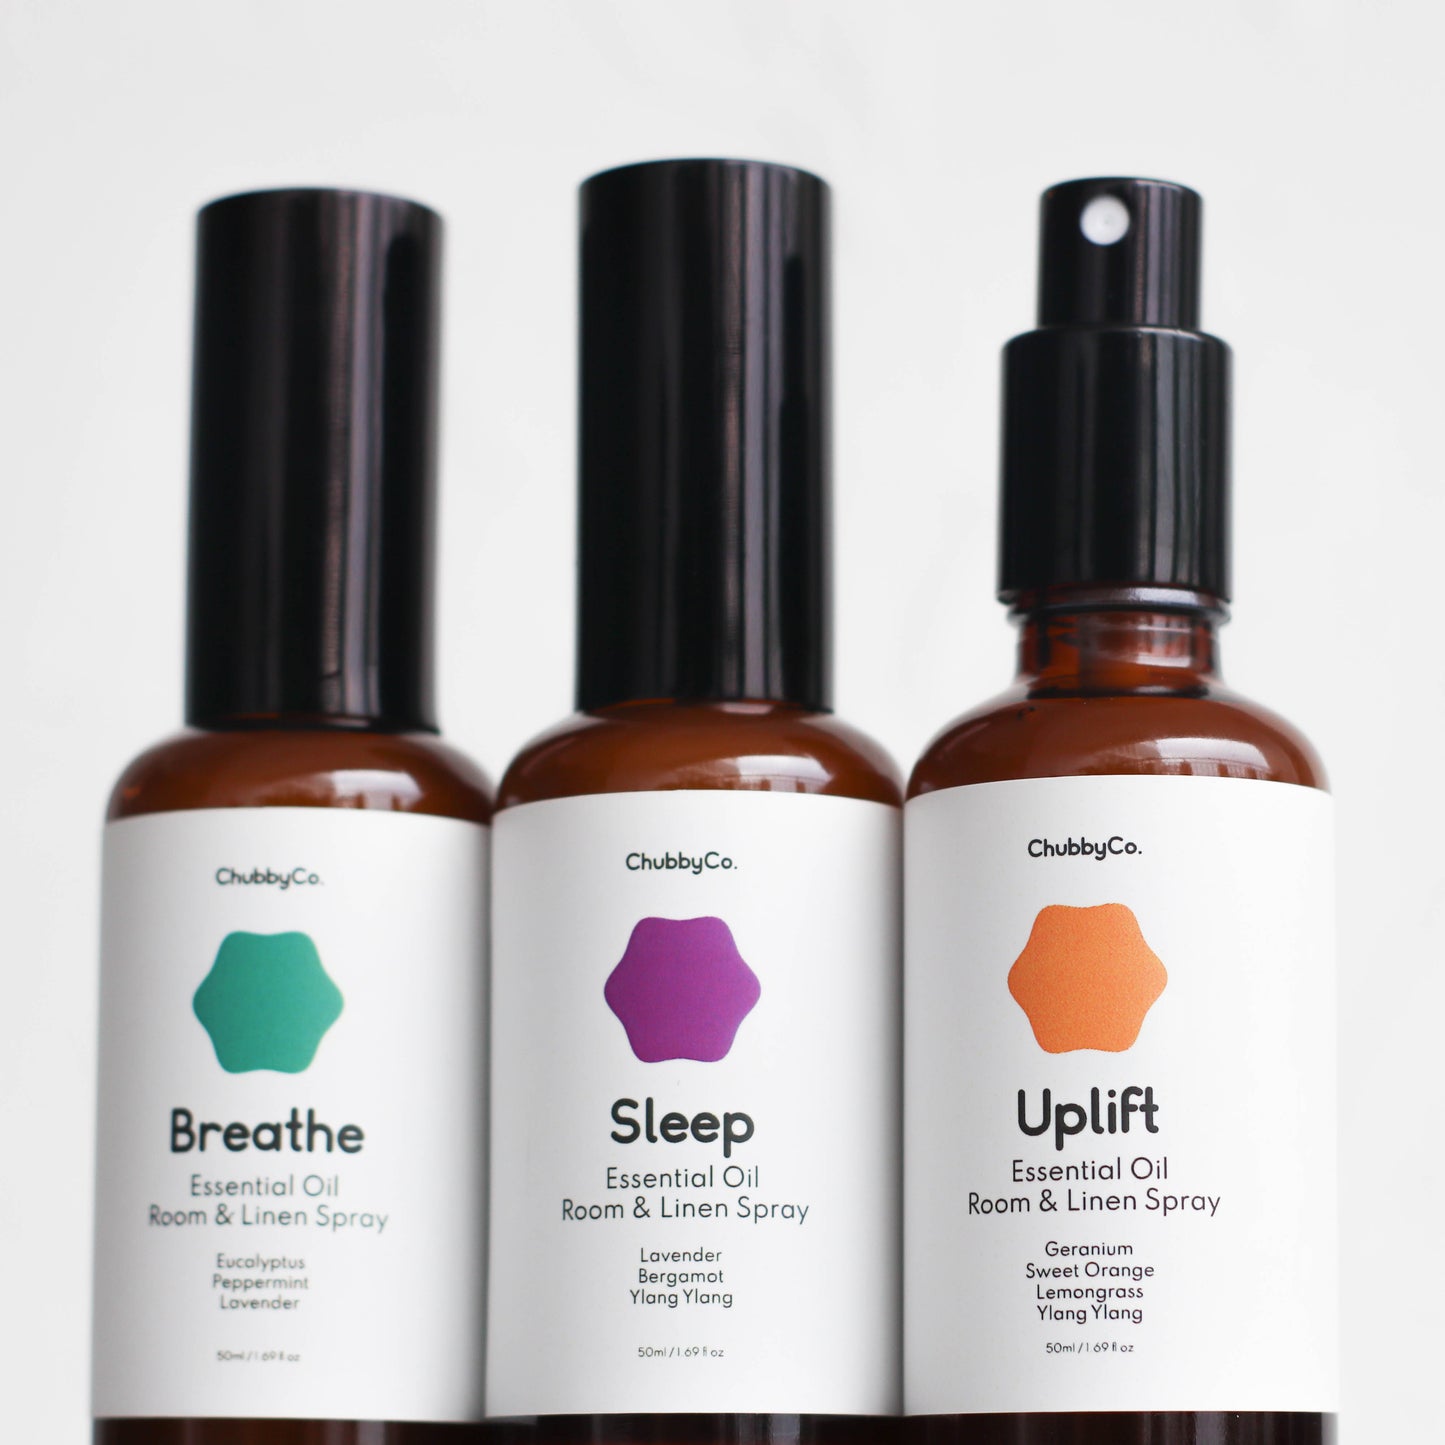 Breathe Essential Oil Room & Linen Spray